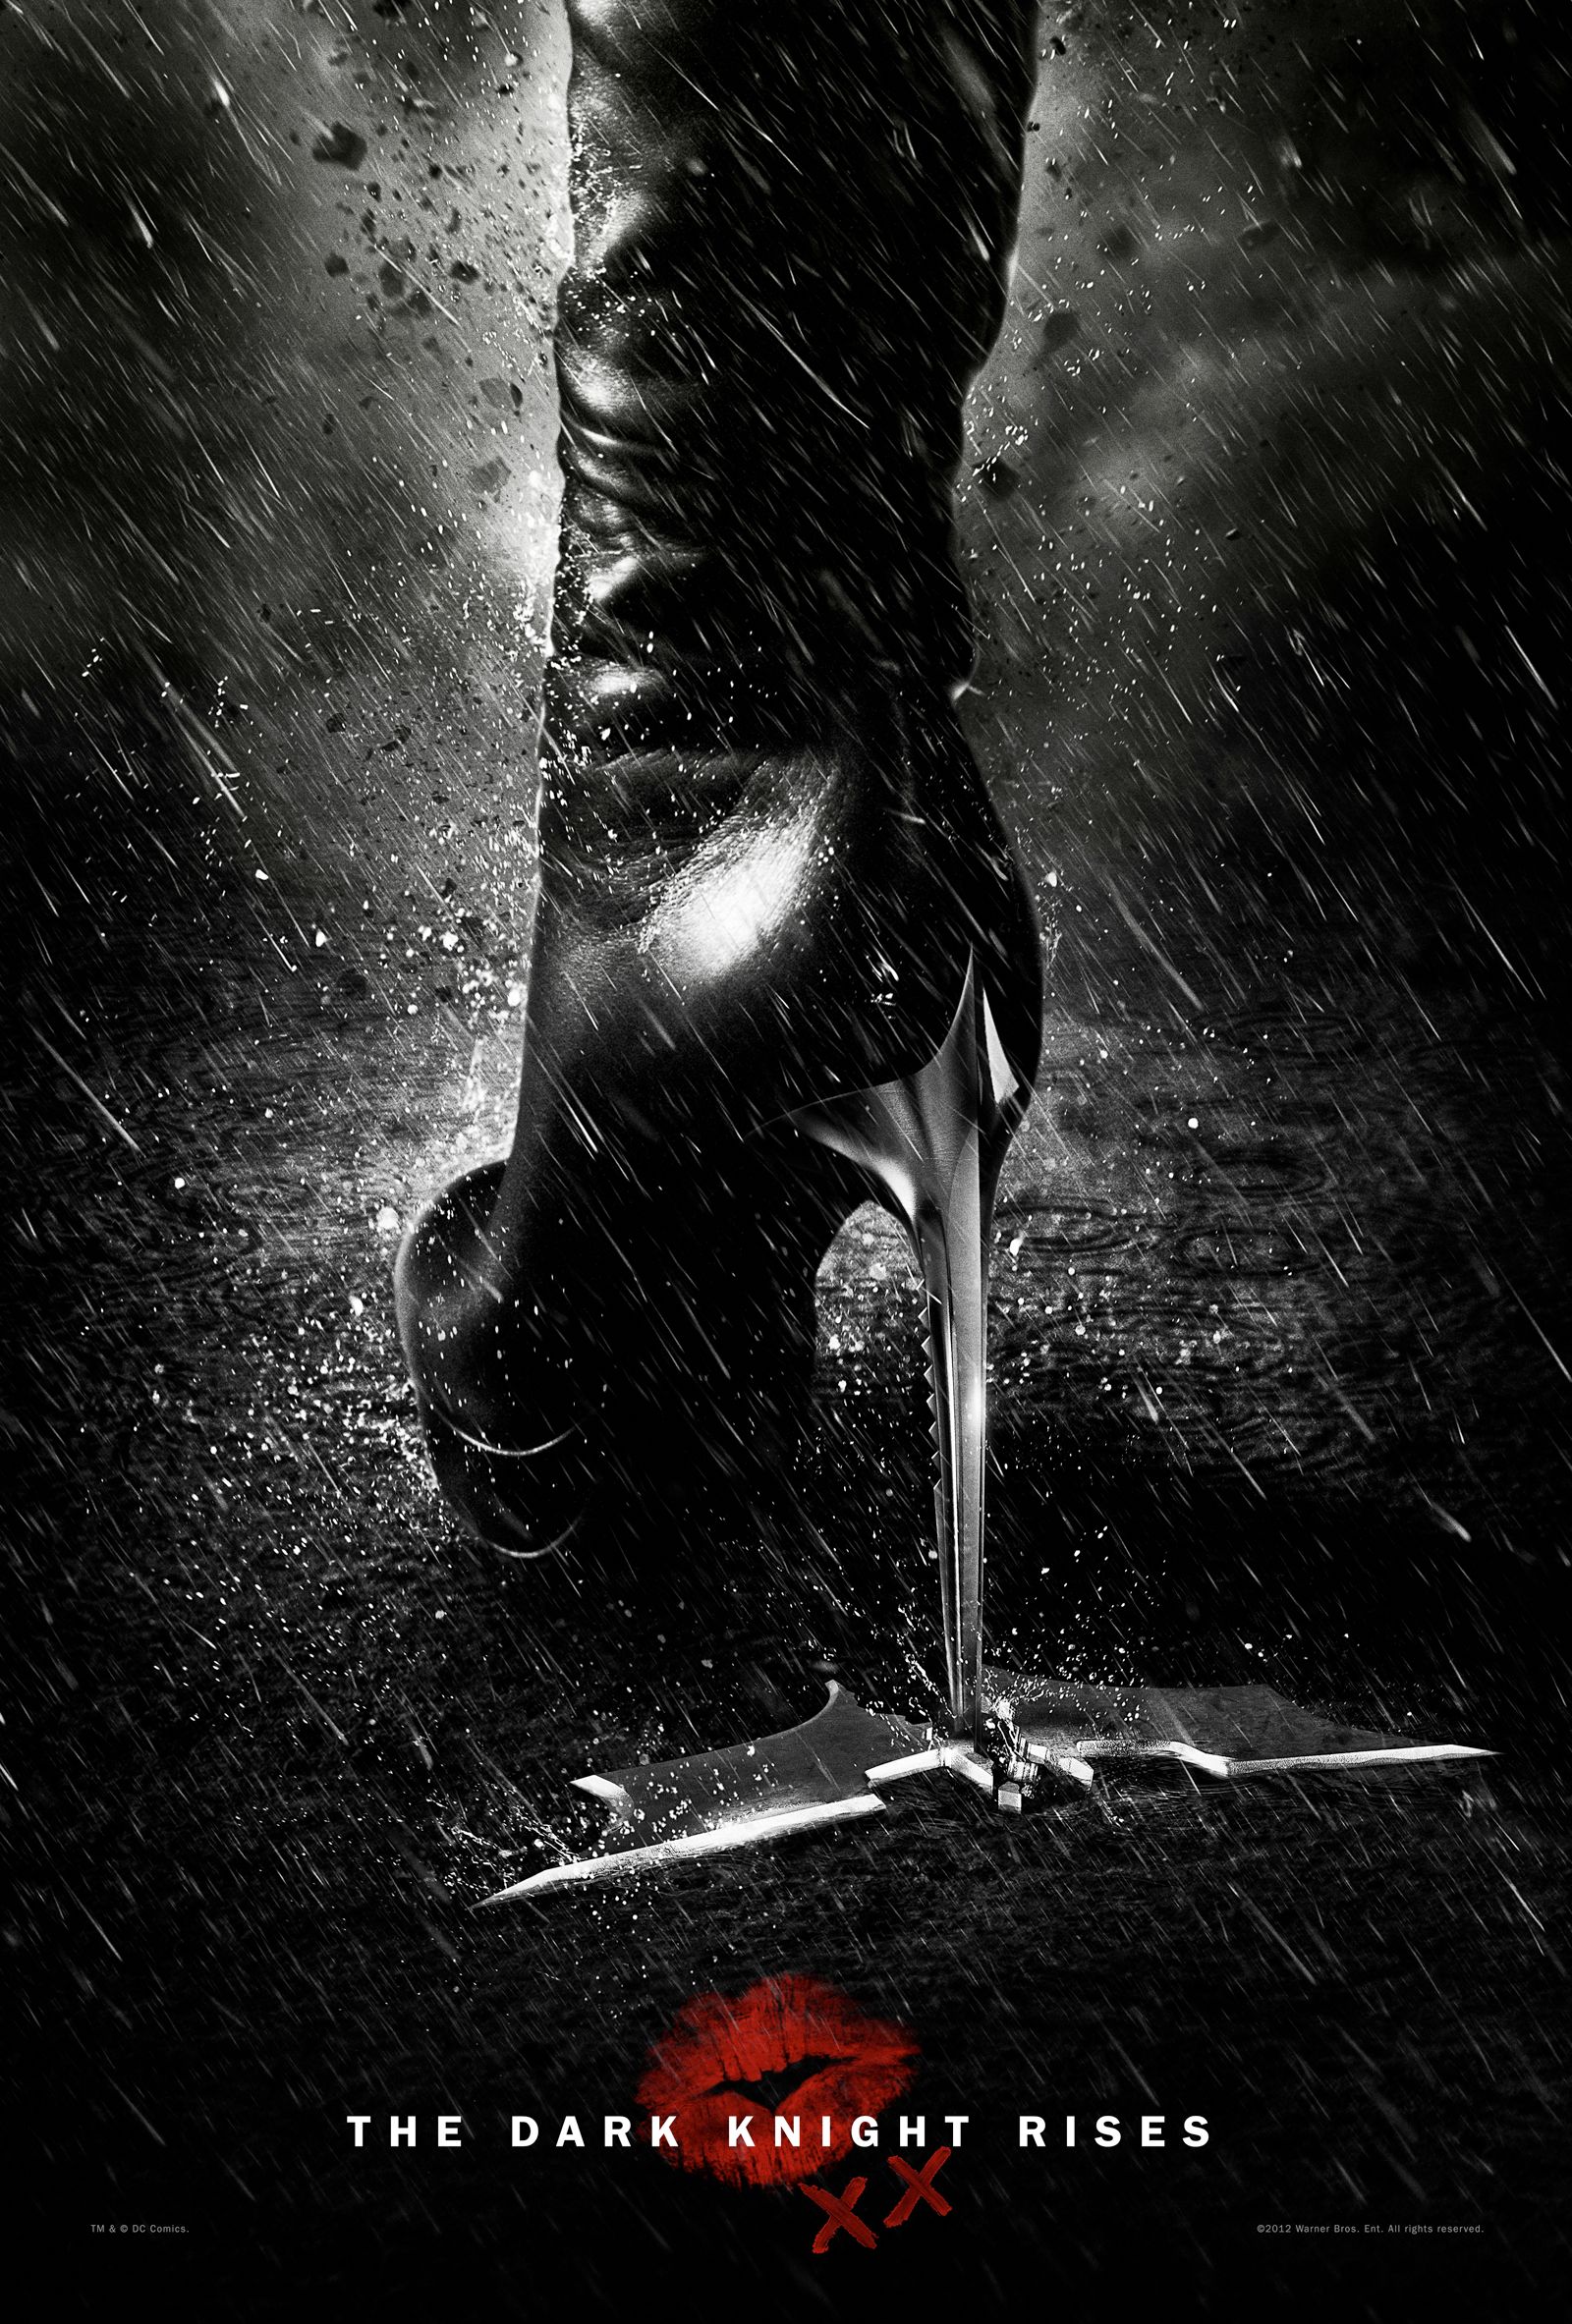 Amazoncom: The Dark Knight Rises: Christian Bale, Michael